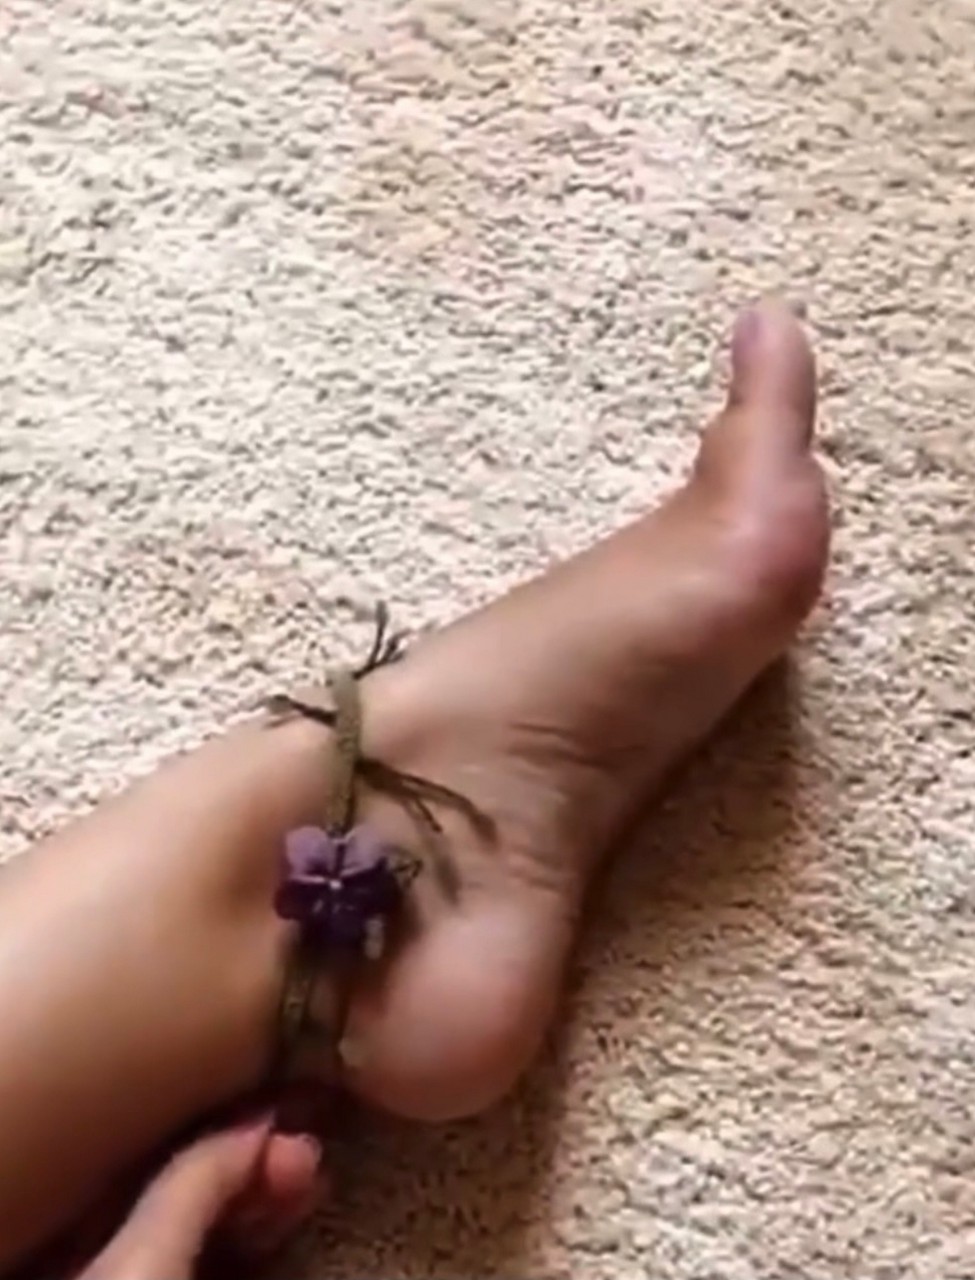 Lulu Alhassan Feet